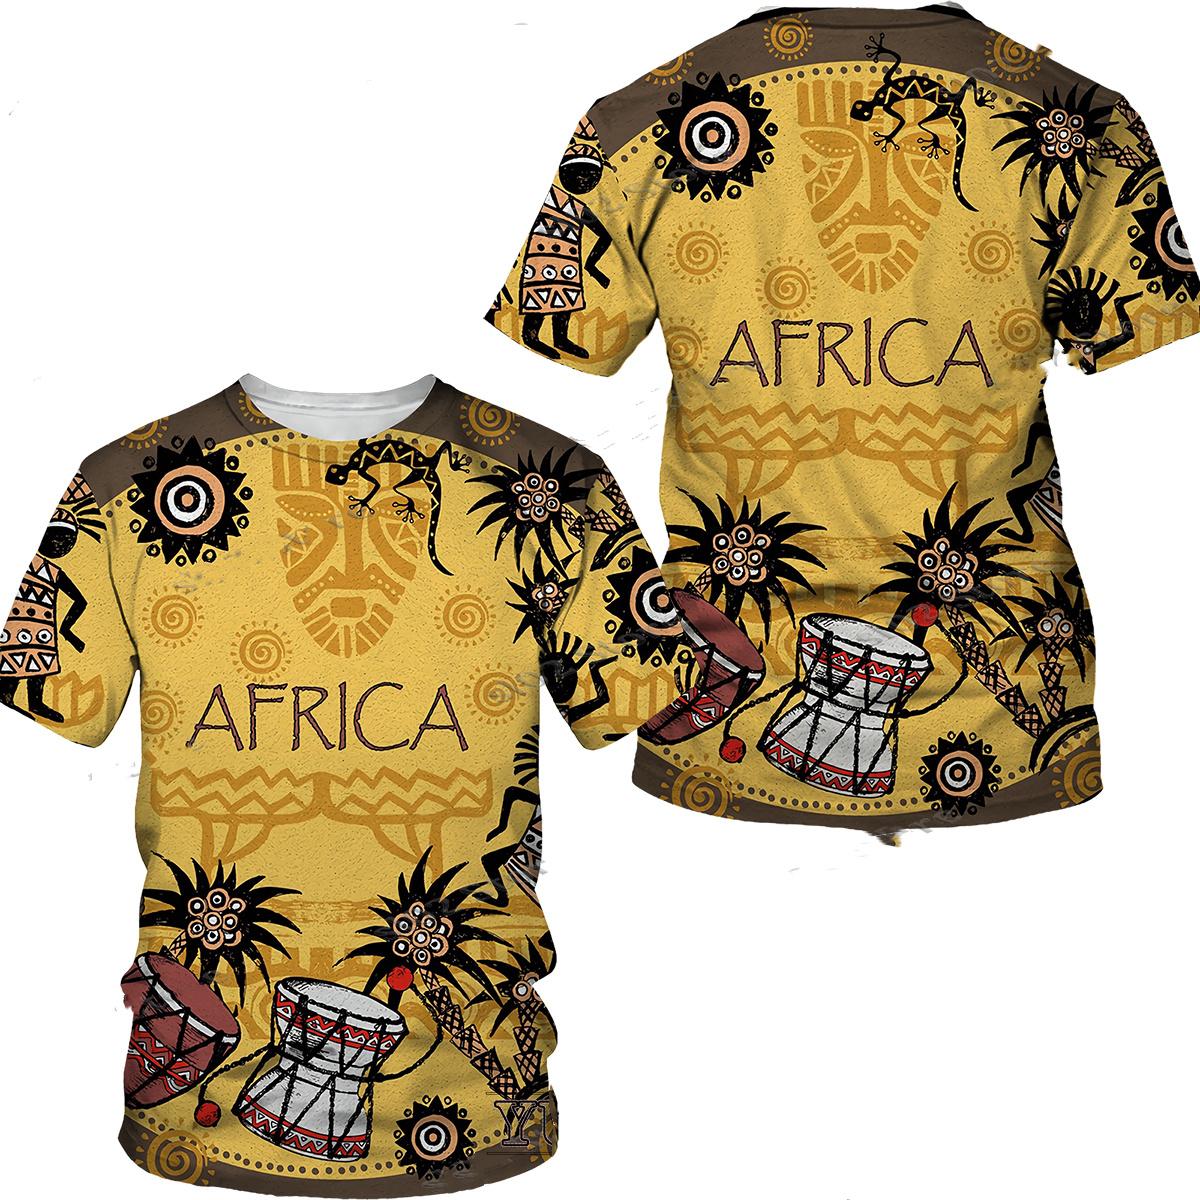 Kukebang Etnische stijl 3D-print grafische tees unisex dashiki-kleding zomer heren T-shirt met korte mouwen Street Fashion outfits heren